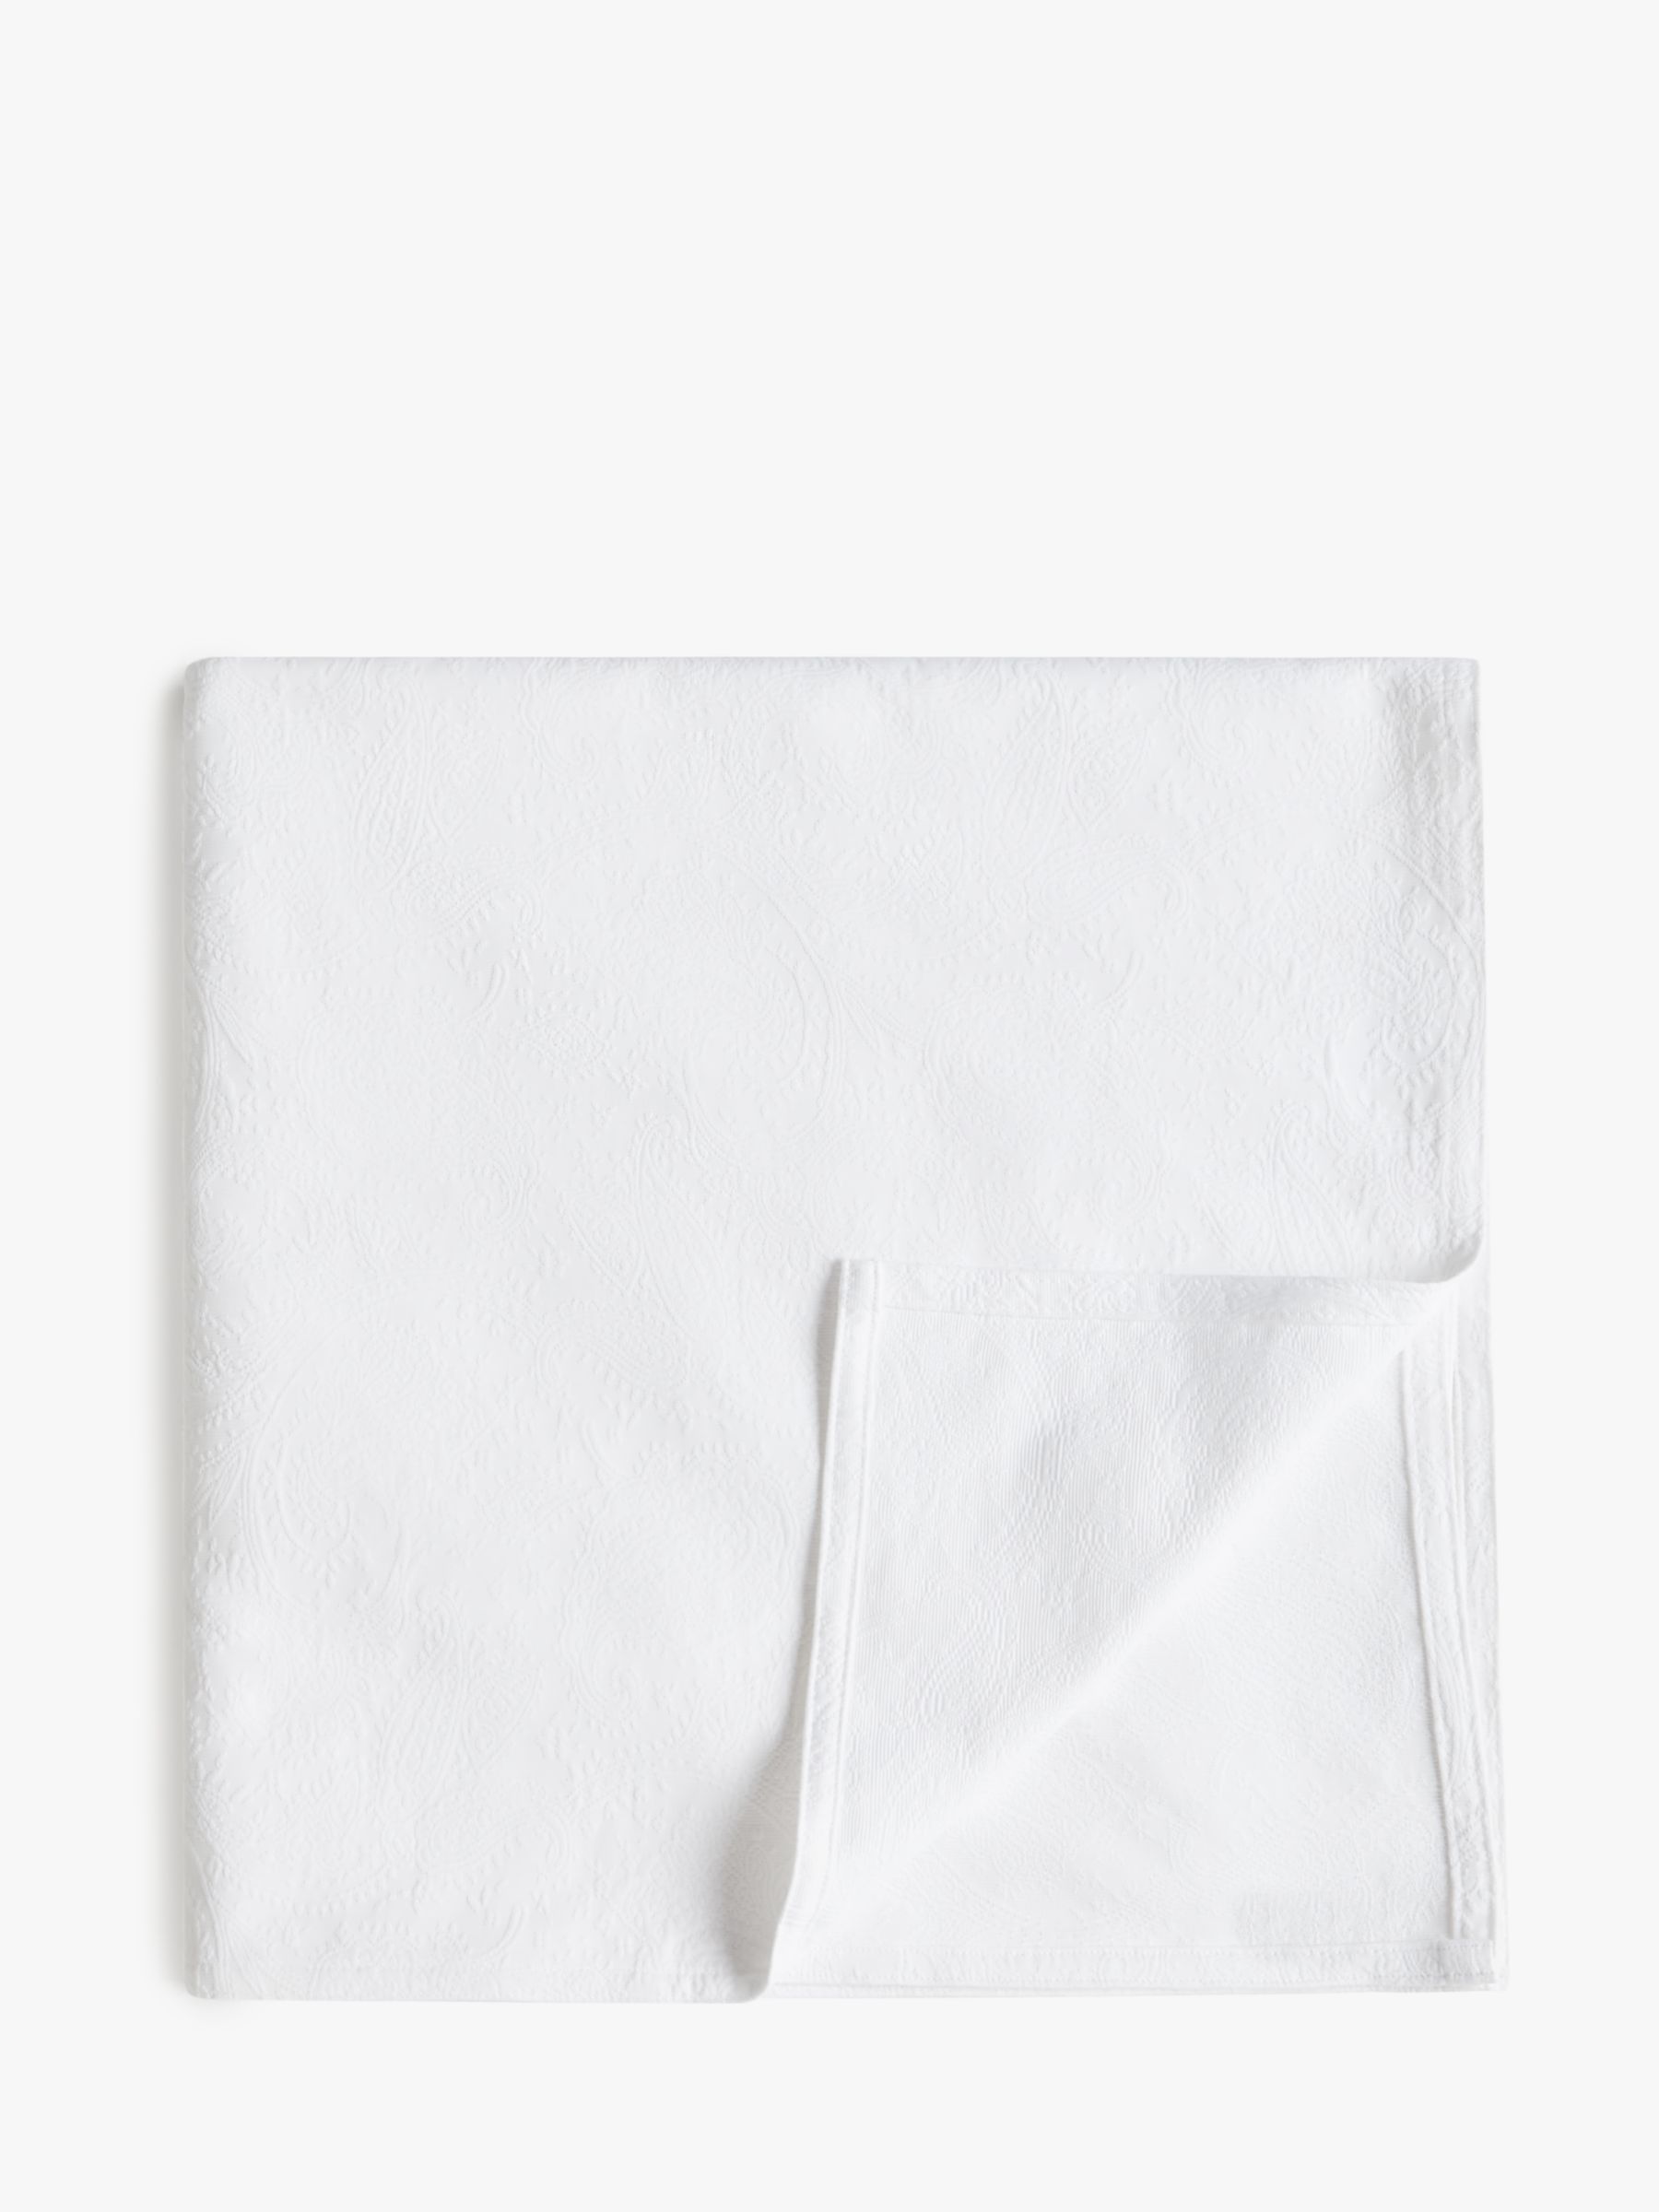 John Lewis & Partners Paisley Bedspread, Grey / White